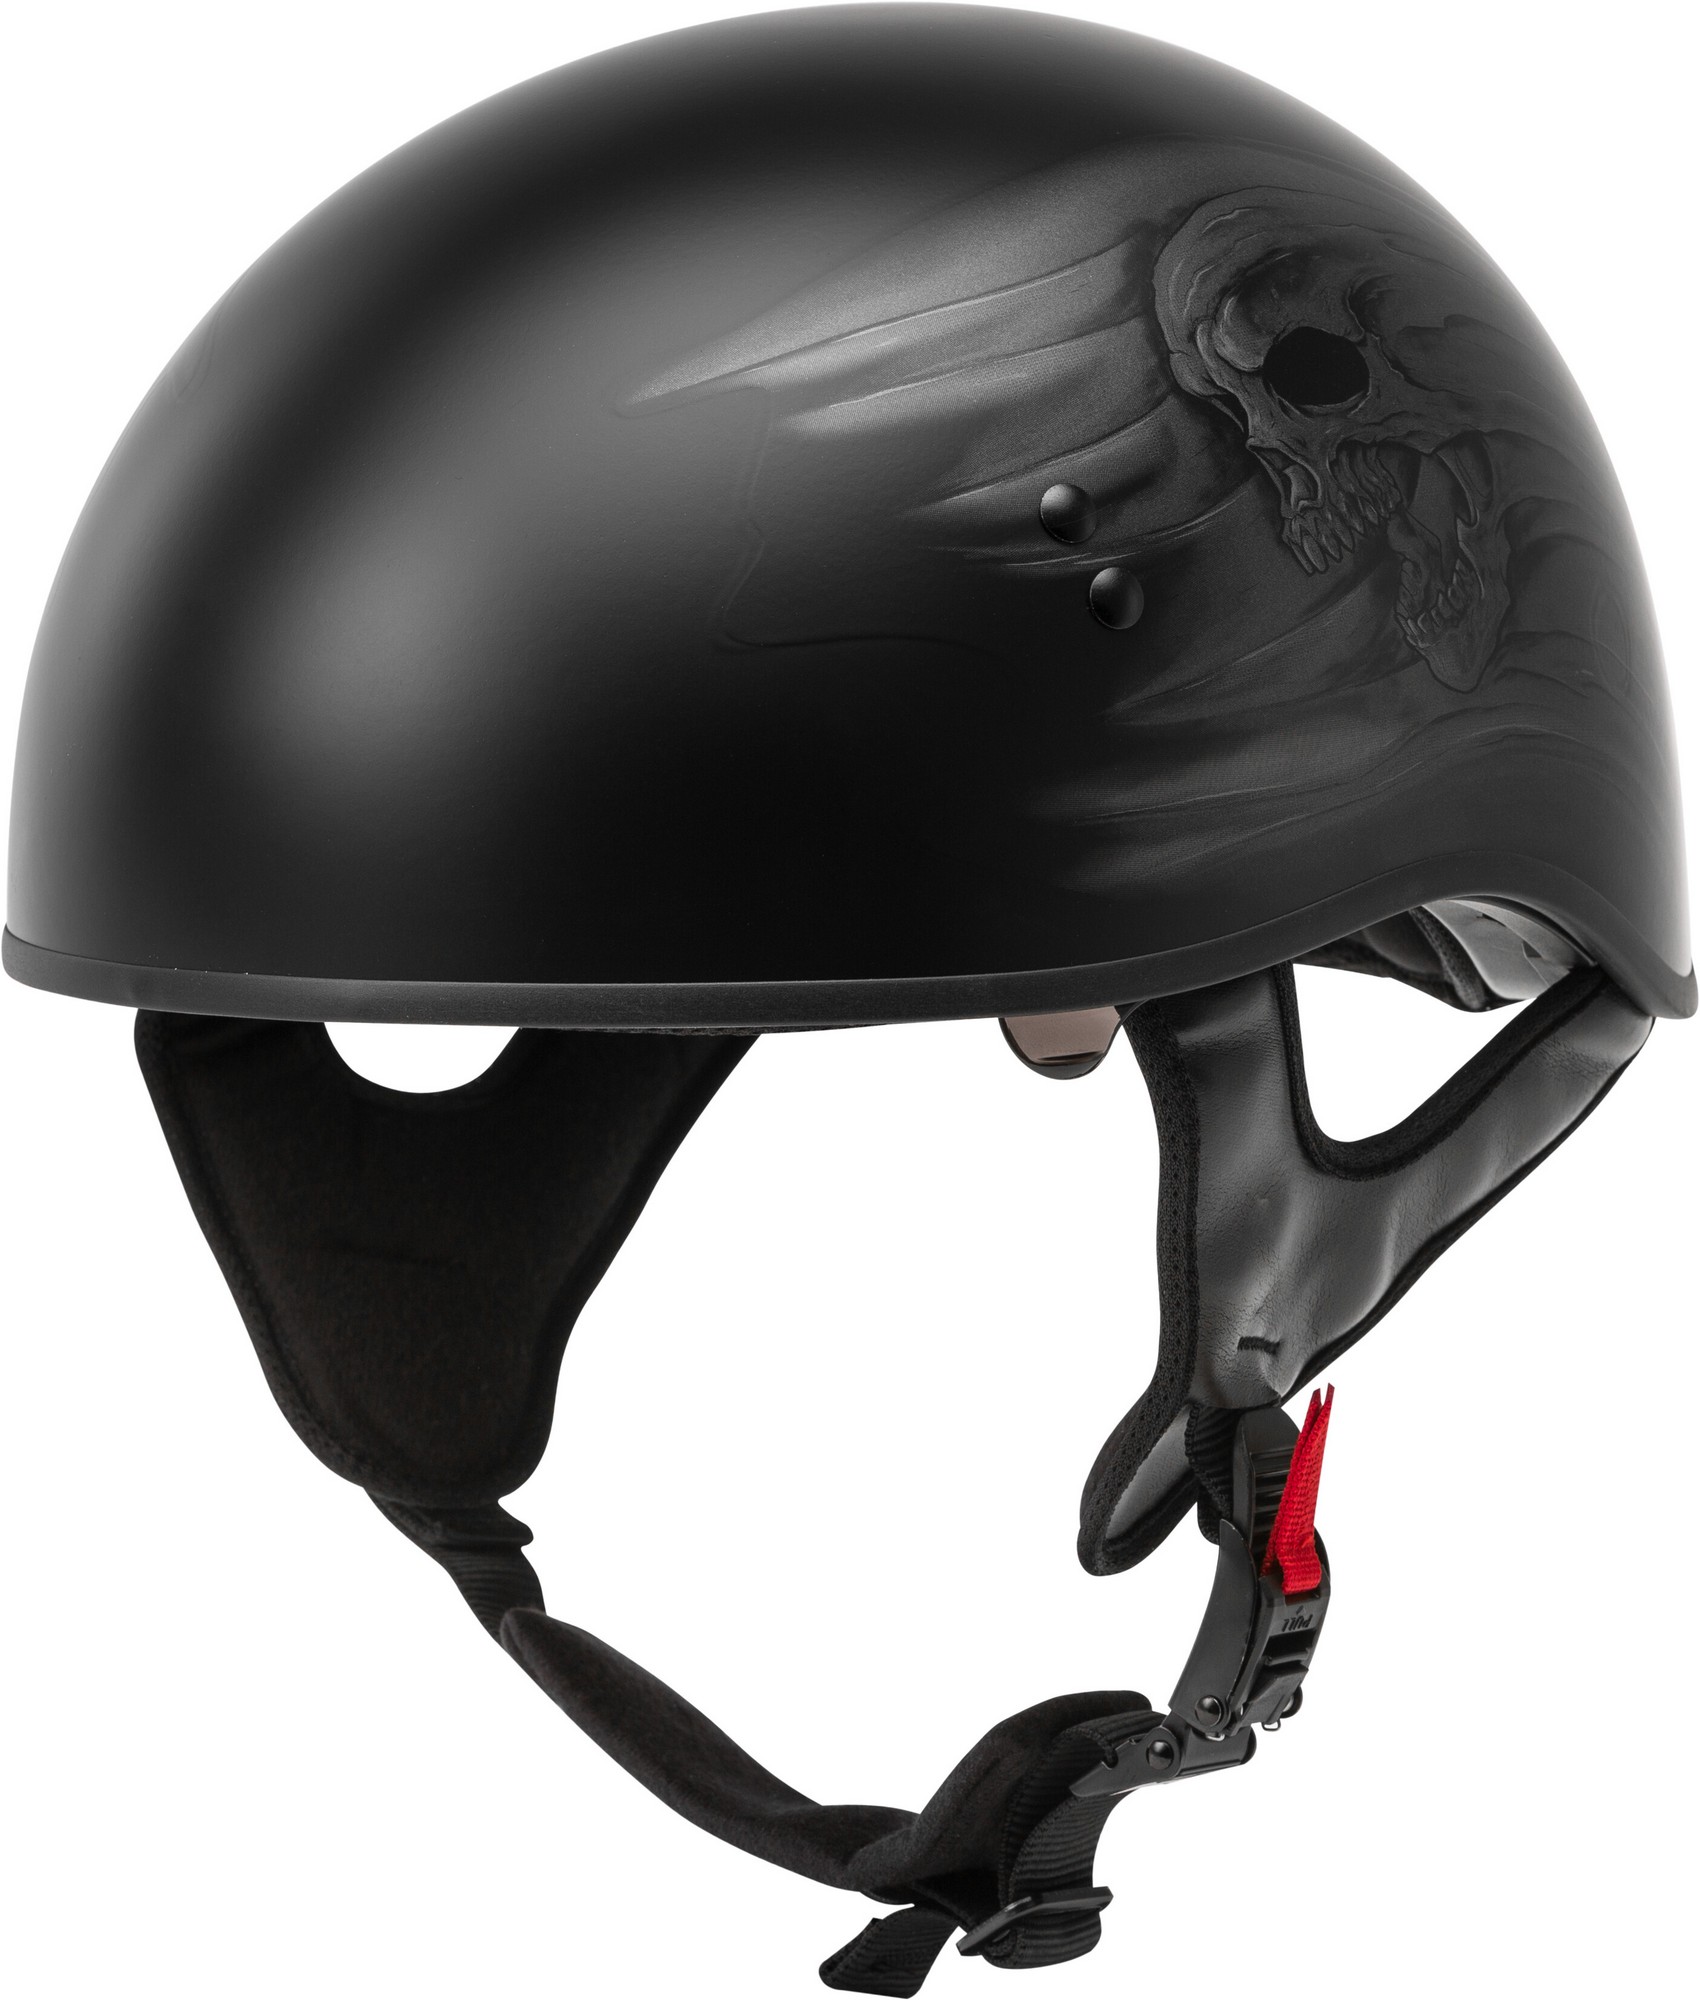 GMAX HH-65 Naked Torque Helmet H1651345 | eBay